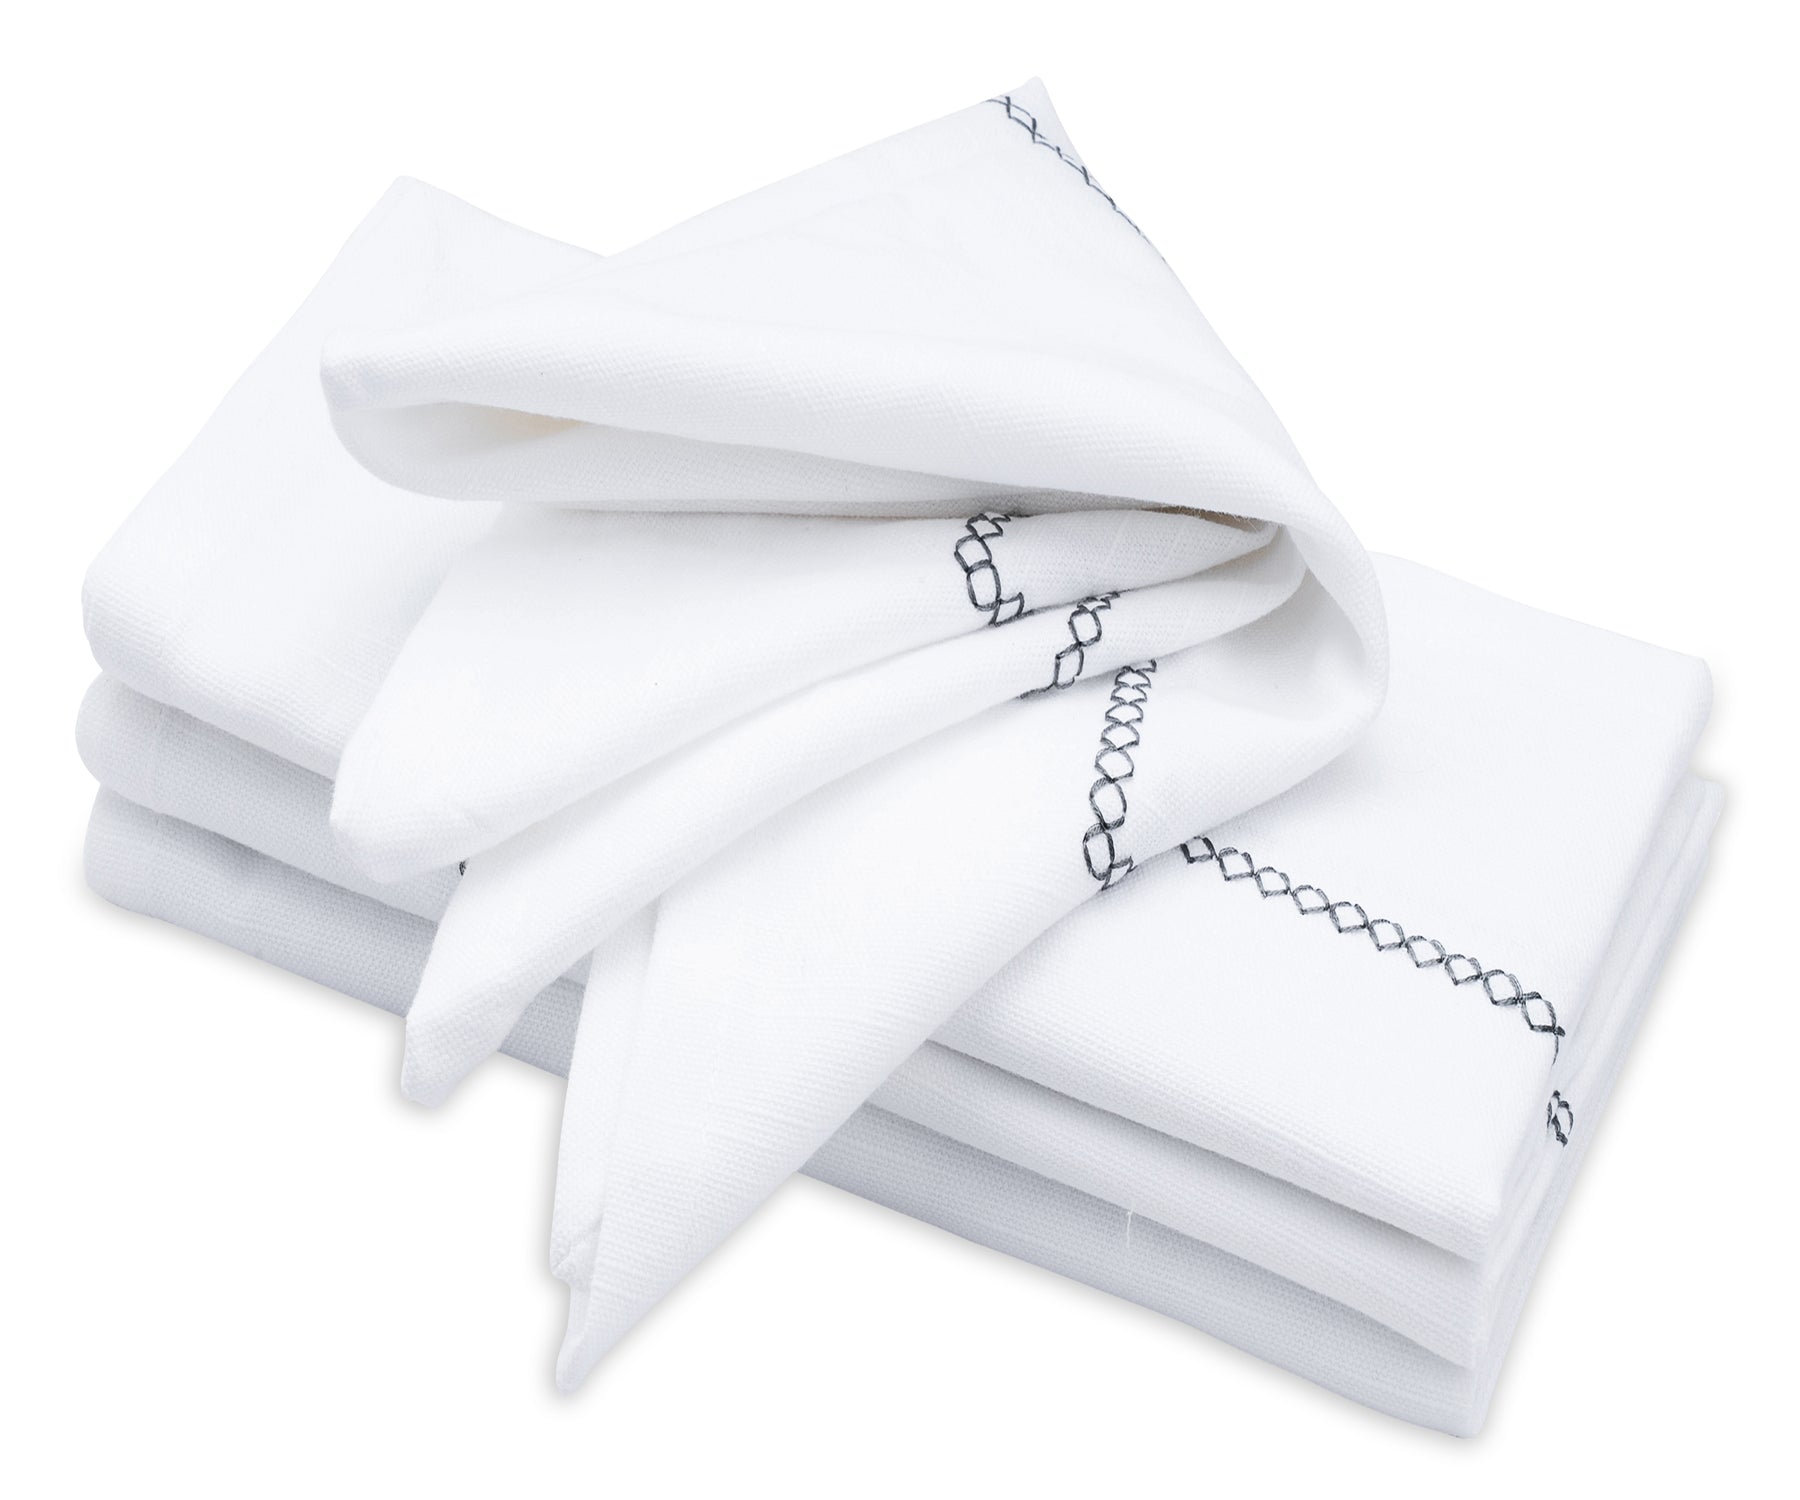 Linen dinner napkins 100. Wedding linen napkins. Gray linen napkins of pure  linen. White wedding napkins. Elegant wedding napkins. Wholesale